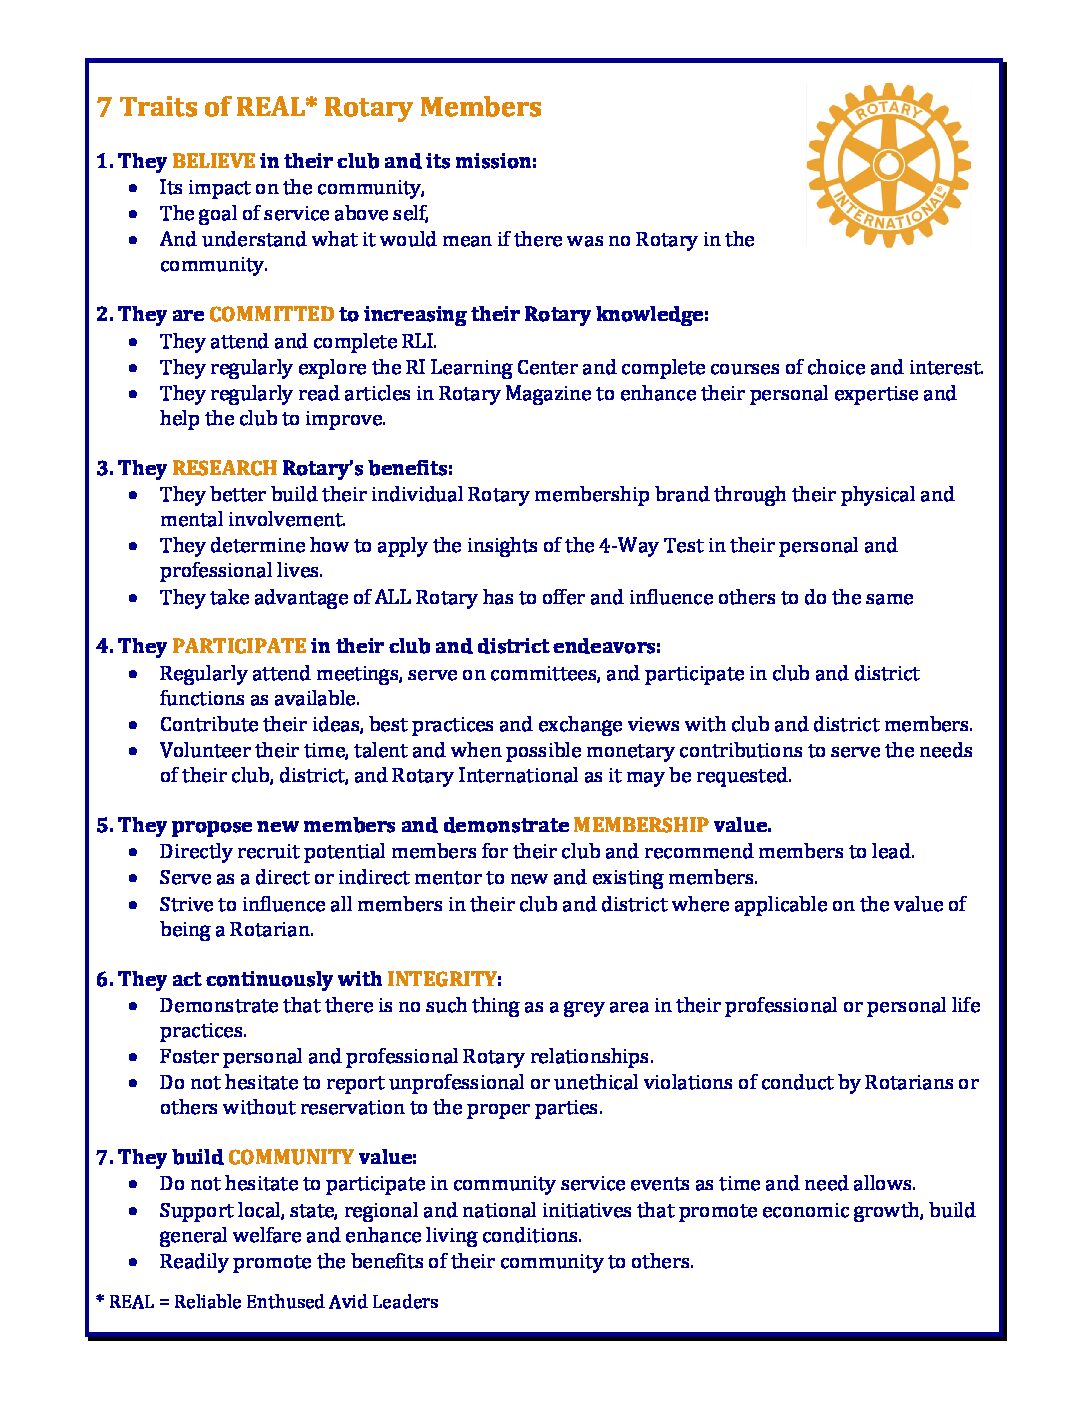 7 traits of a Rotarian